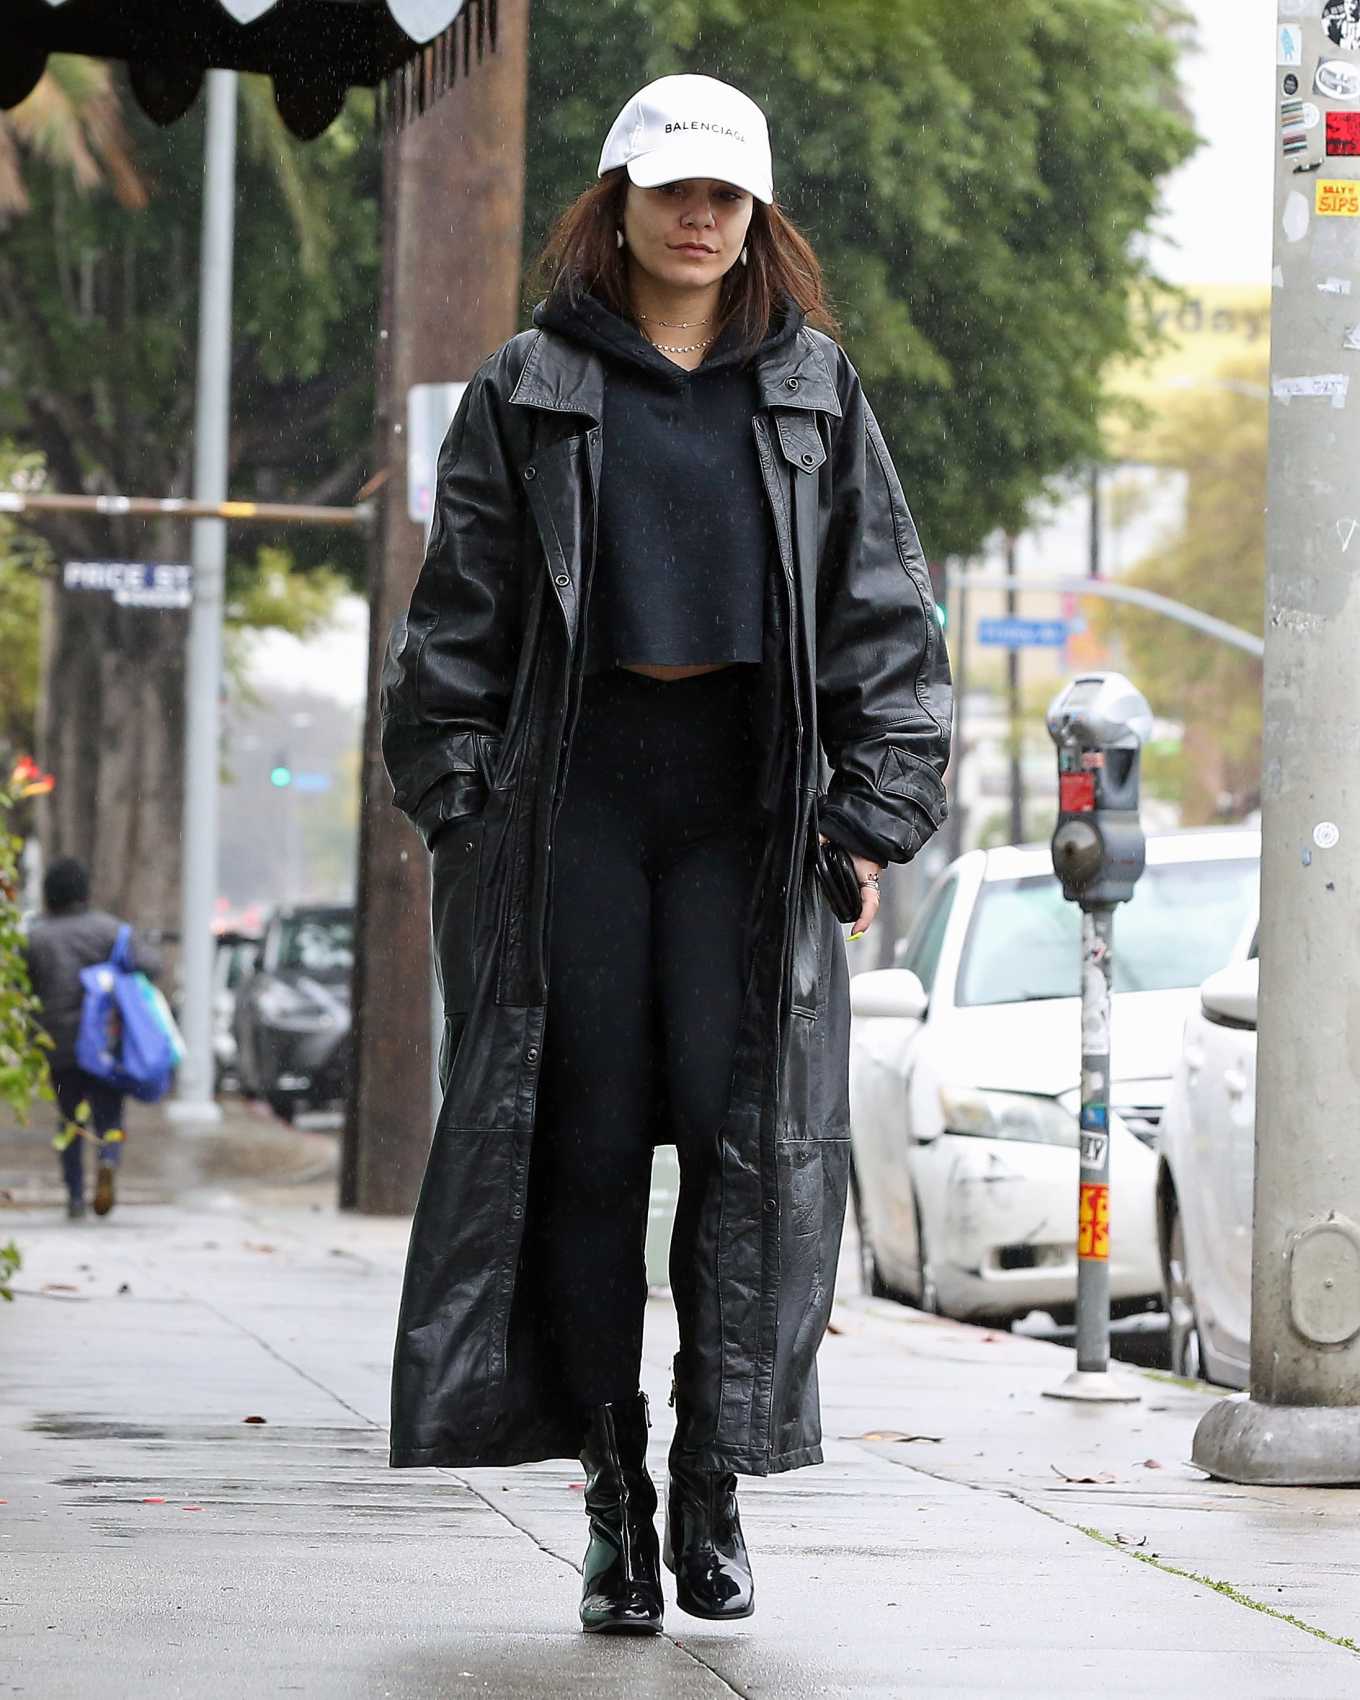 Vanessa Hudgens â€“ Wears a massive coat as she braves the rain in Los Angeles